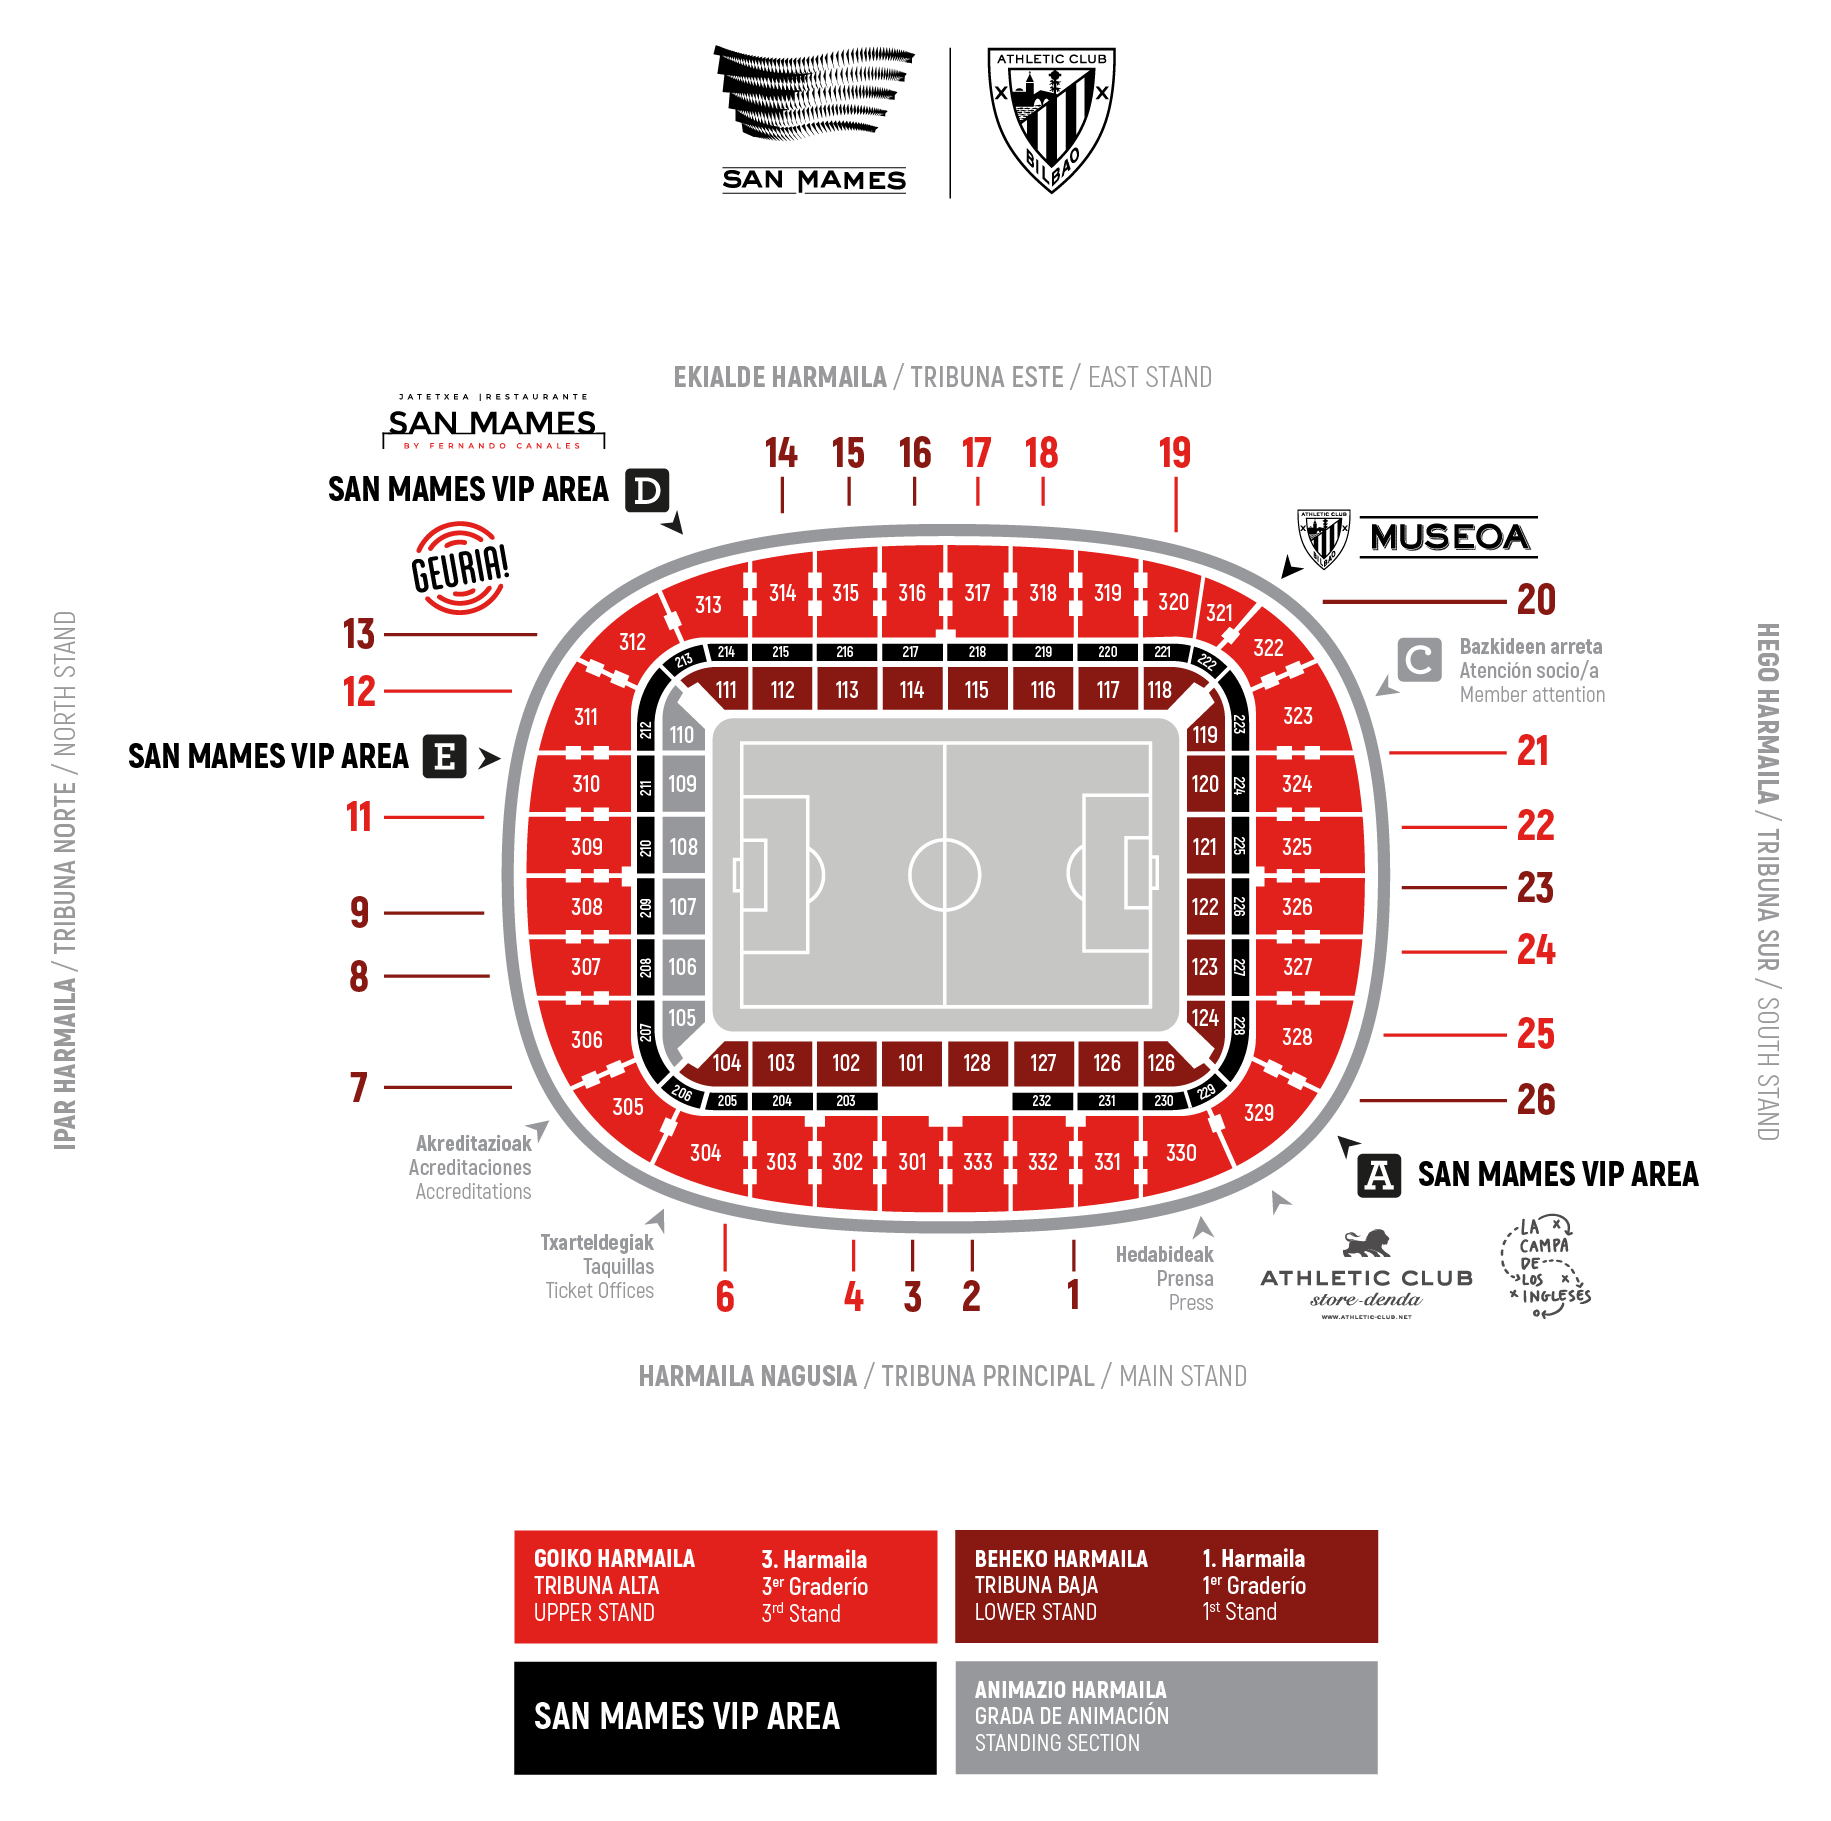 Buy tickets, Girona FC